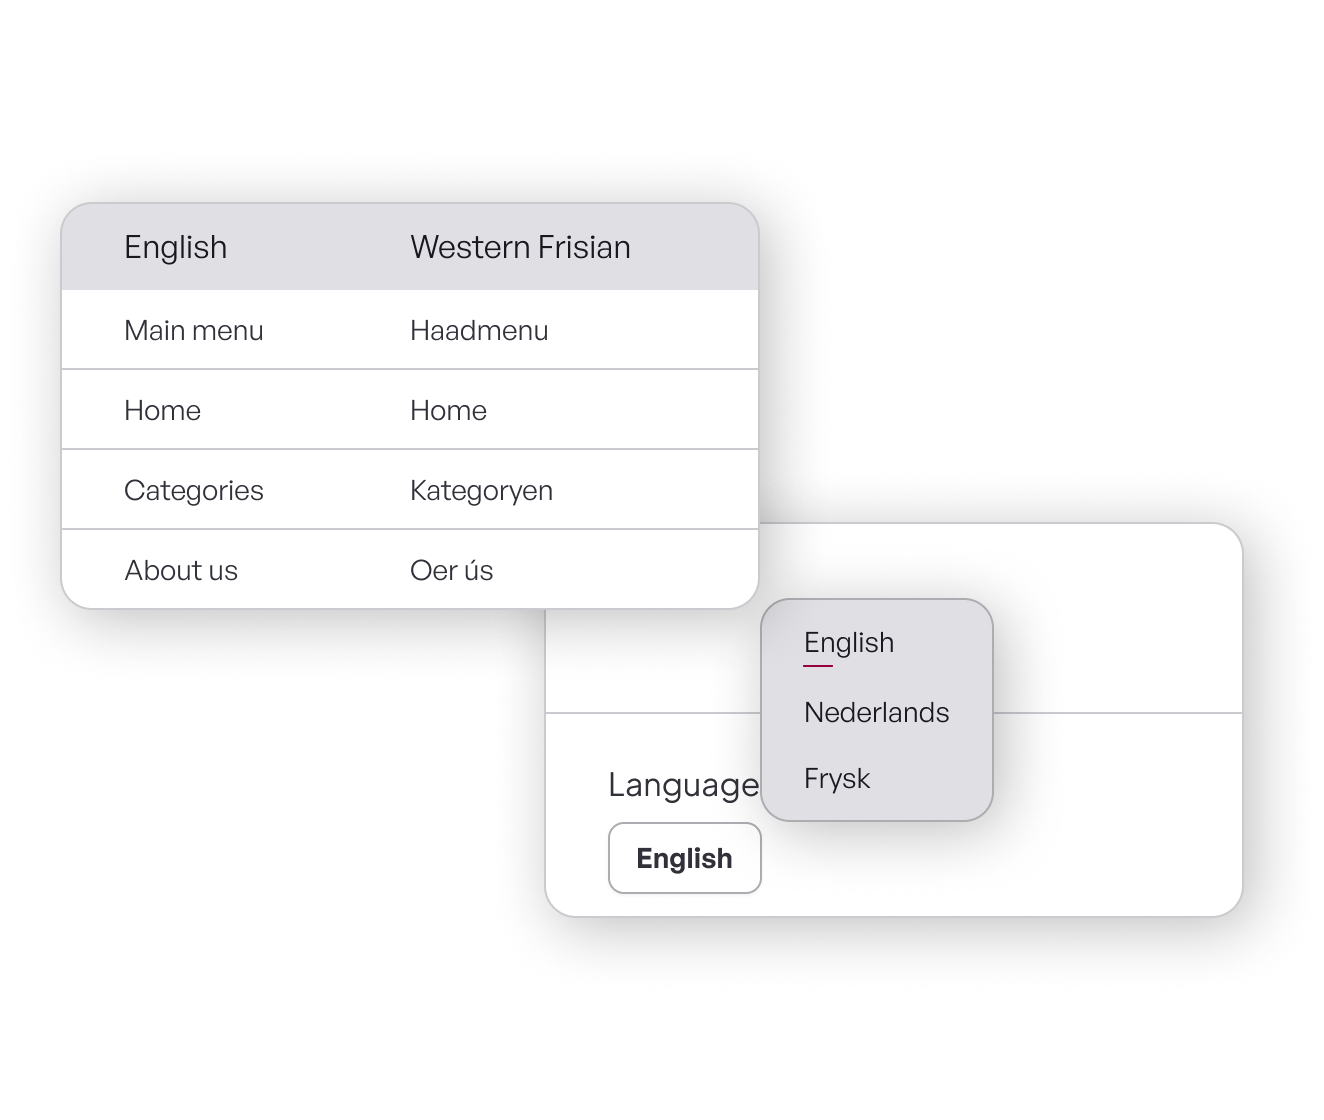 Hero image showing sample language switch options